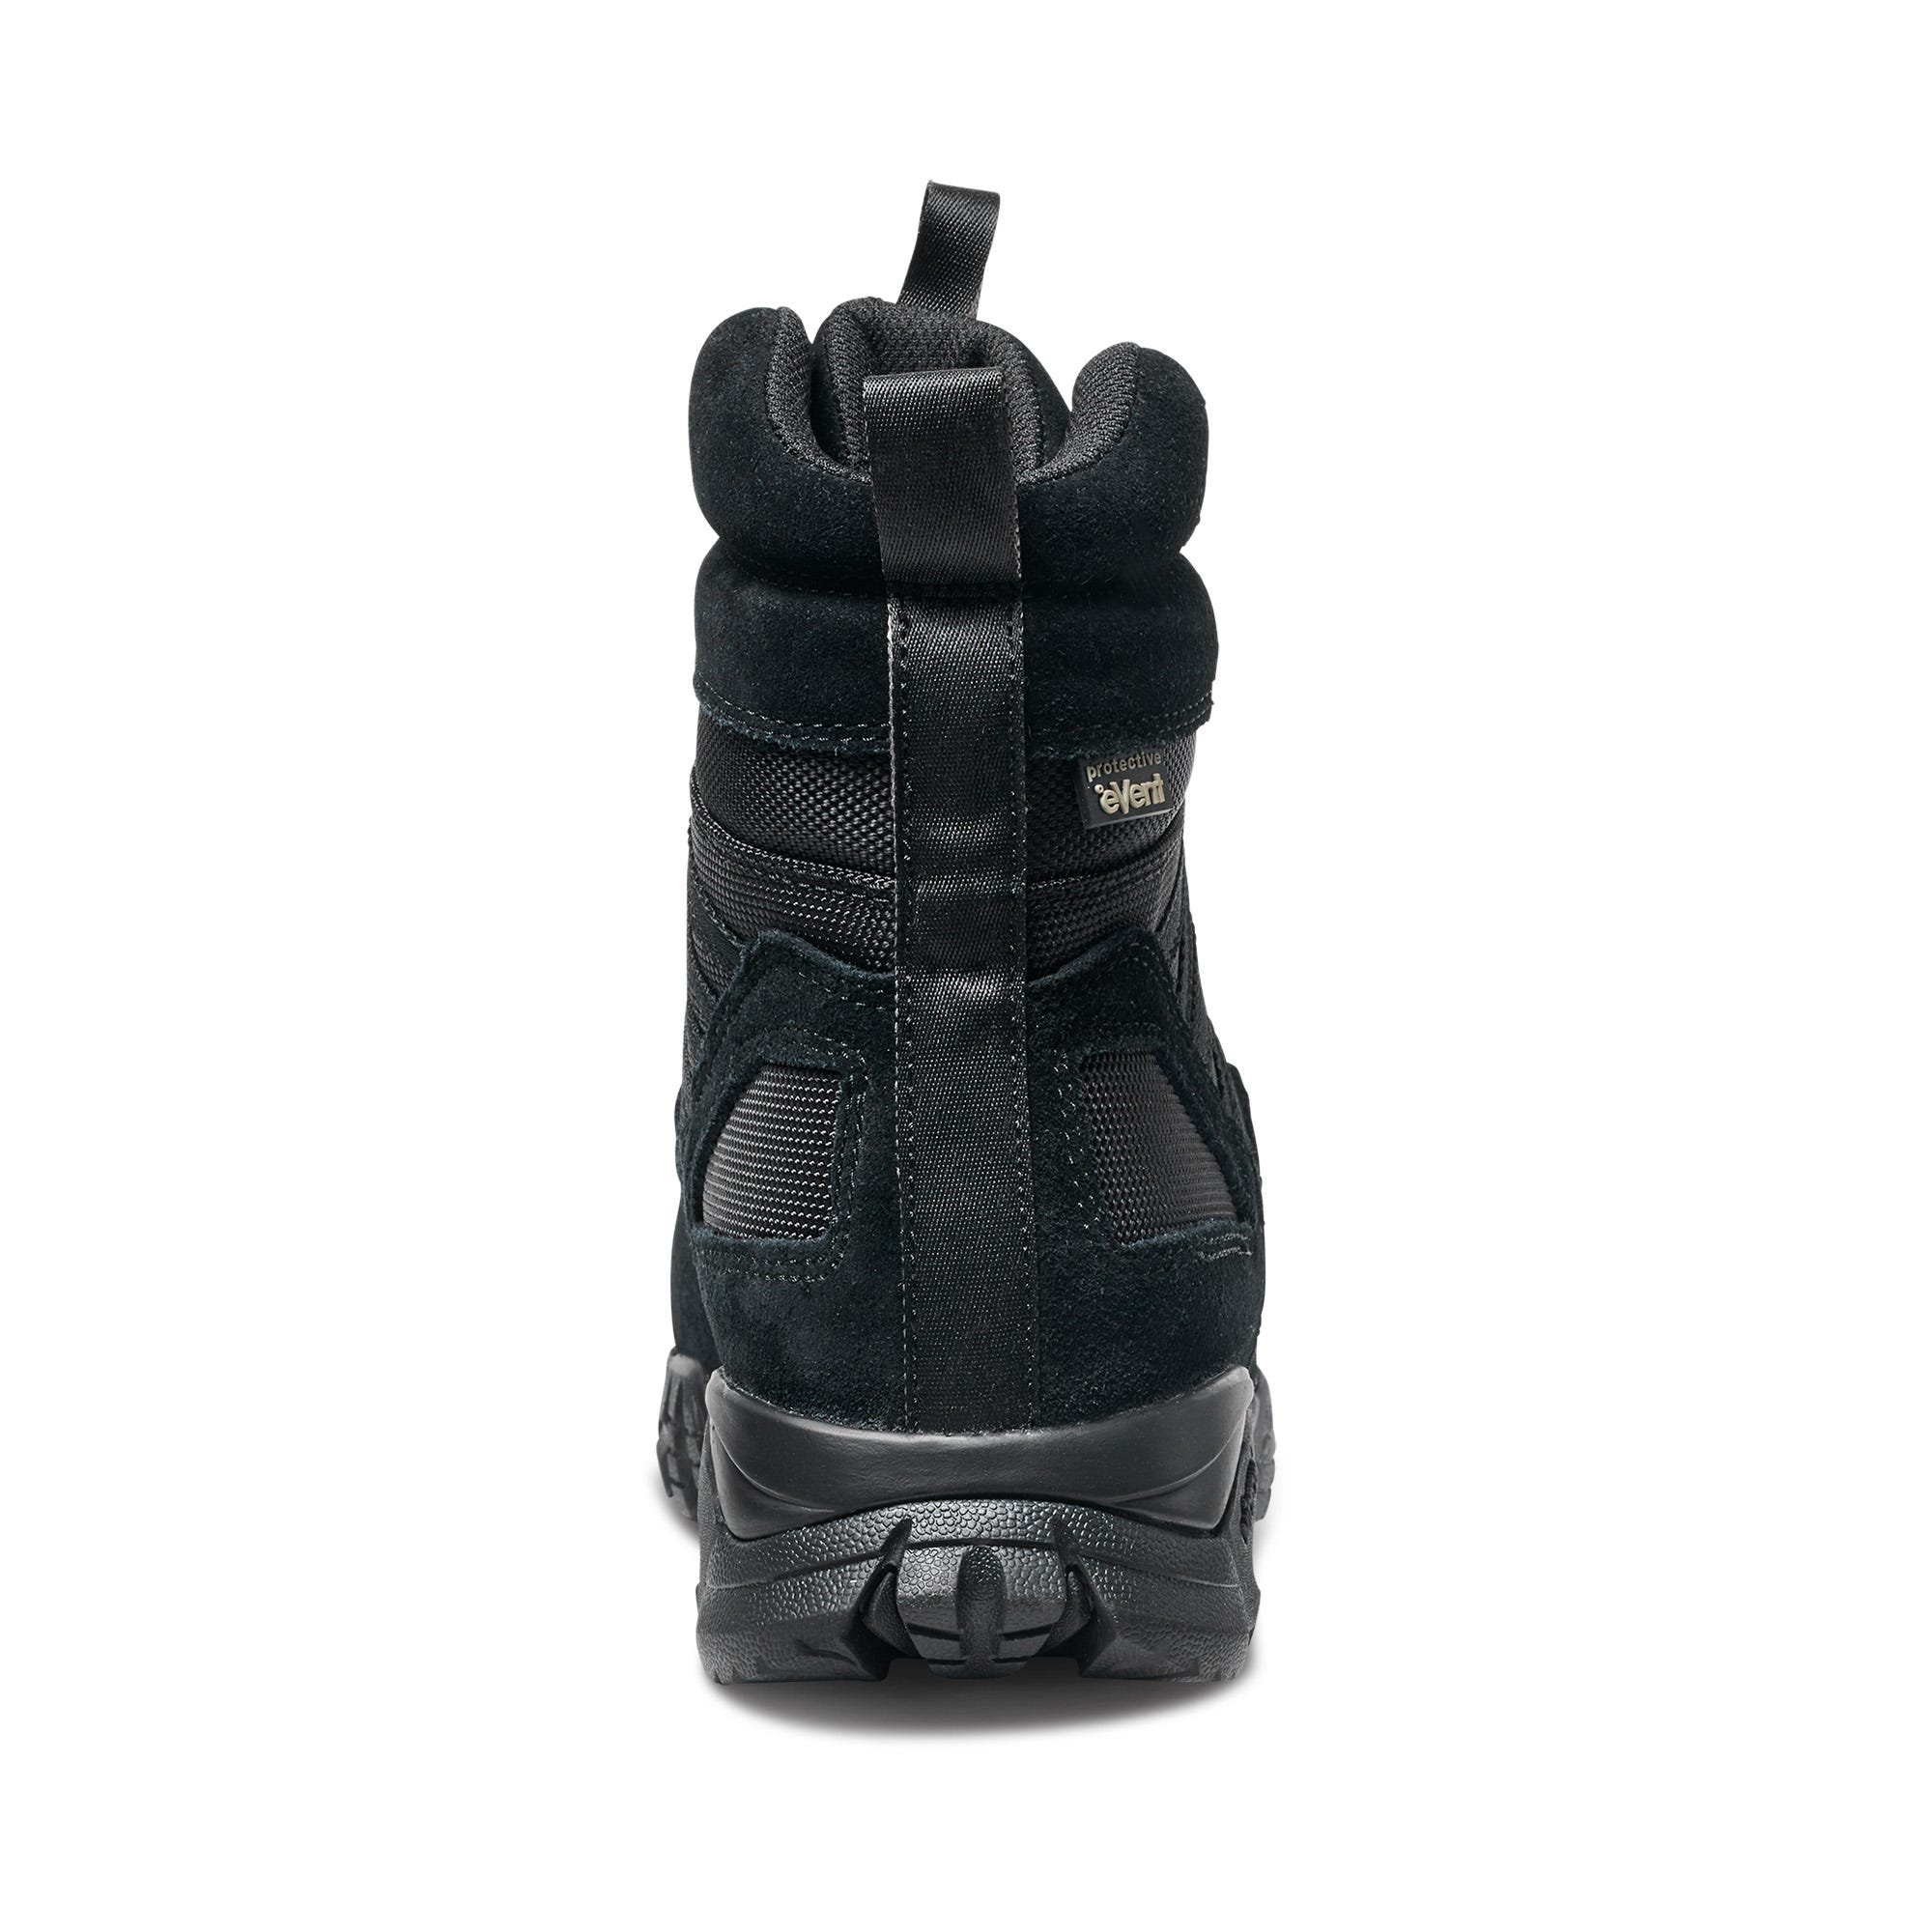 5.11 Work Gear Men's Union Waterproof 6-Inch Work Boots, Shock Absorbing Insole, Black, 7 Wide, Style 12390 - image 3 of 8